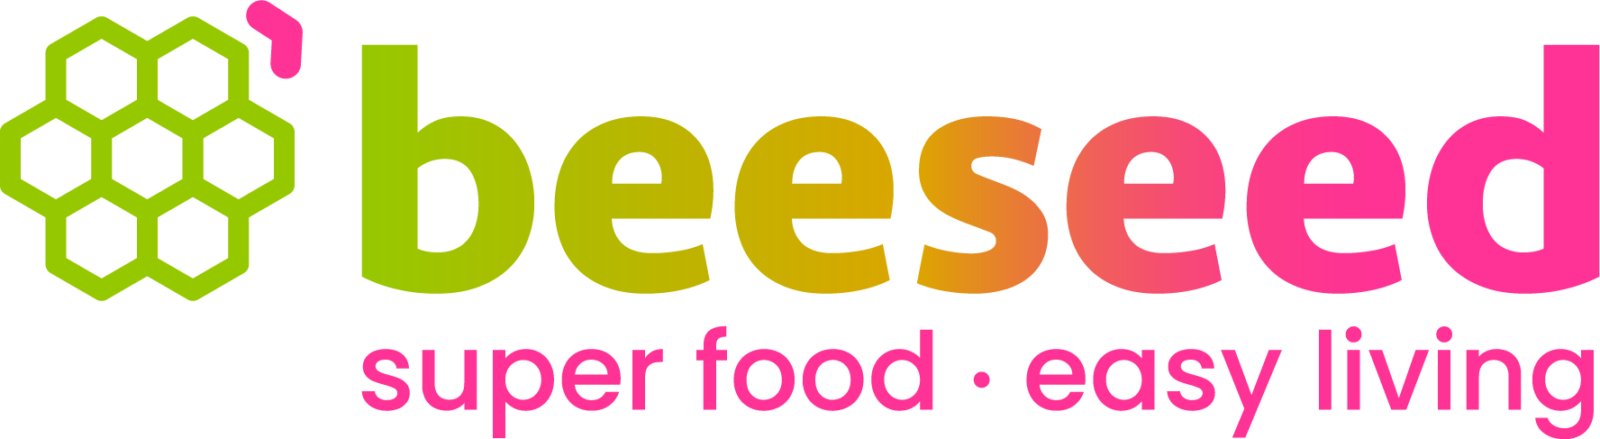 beeseed Logo